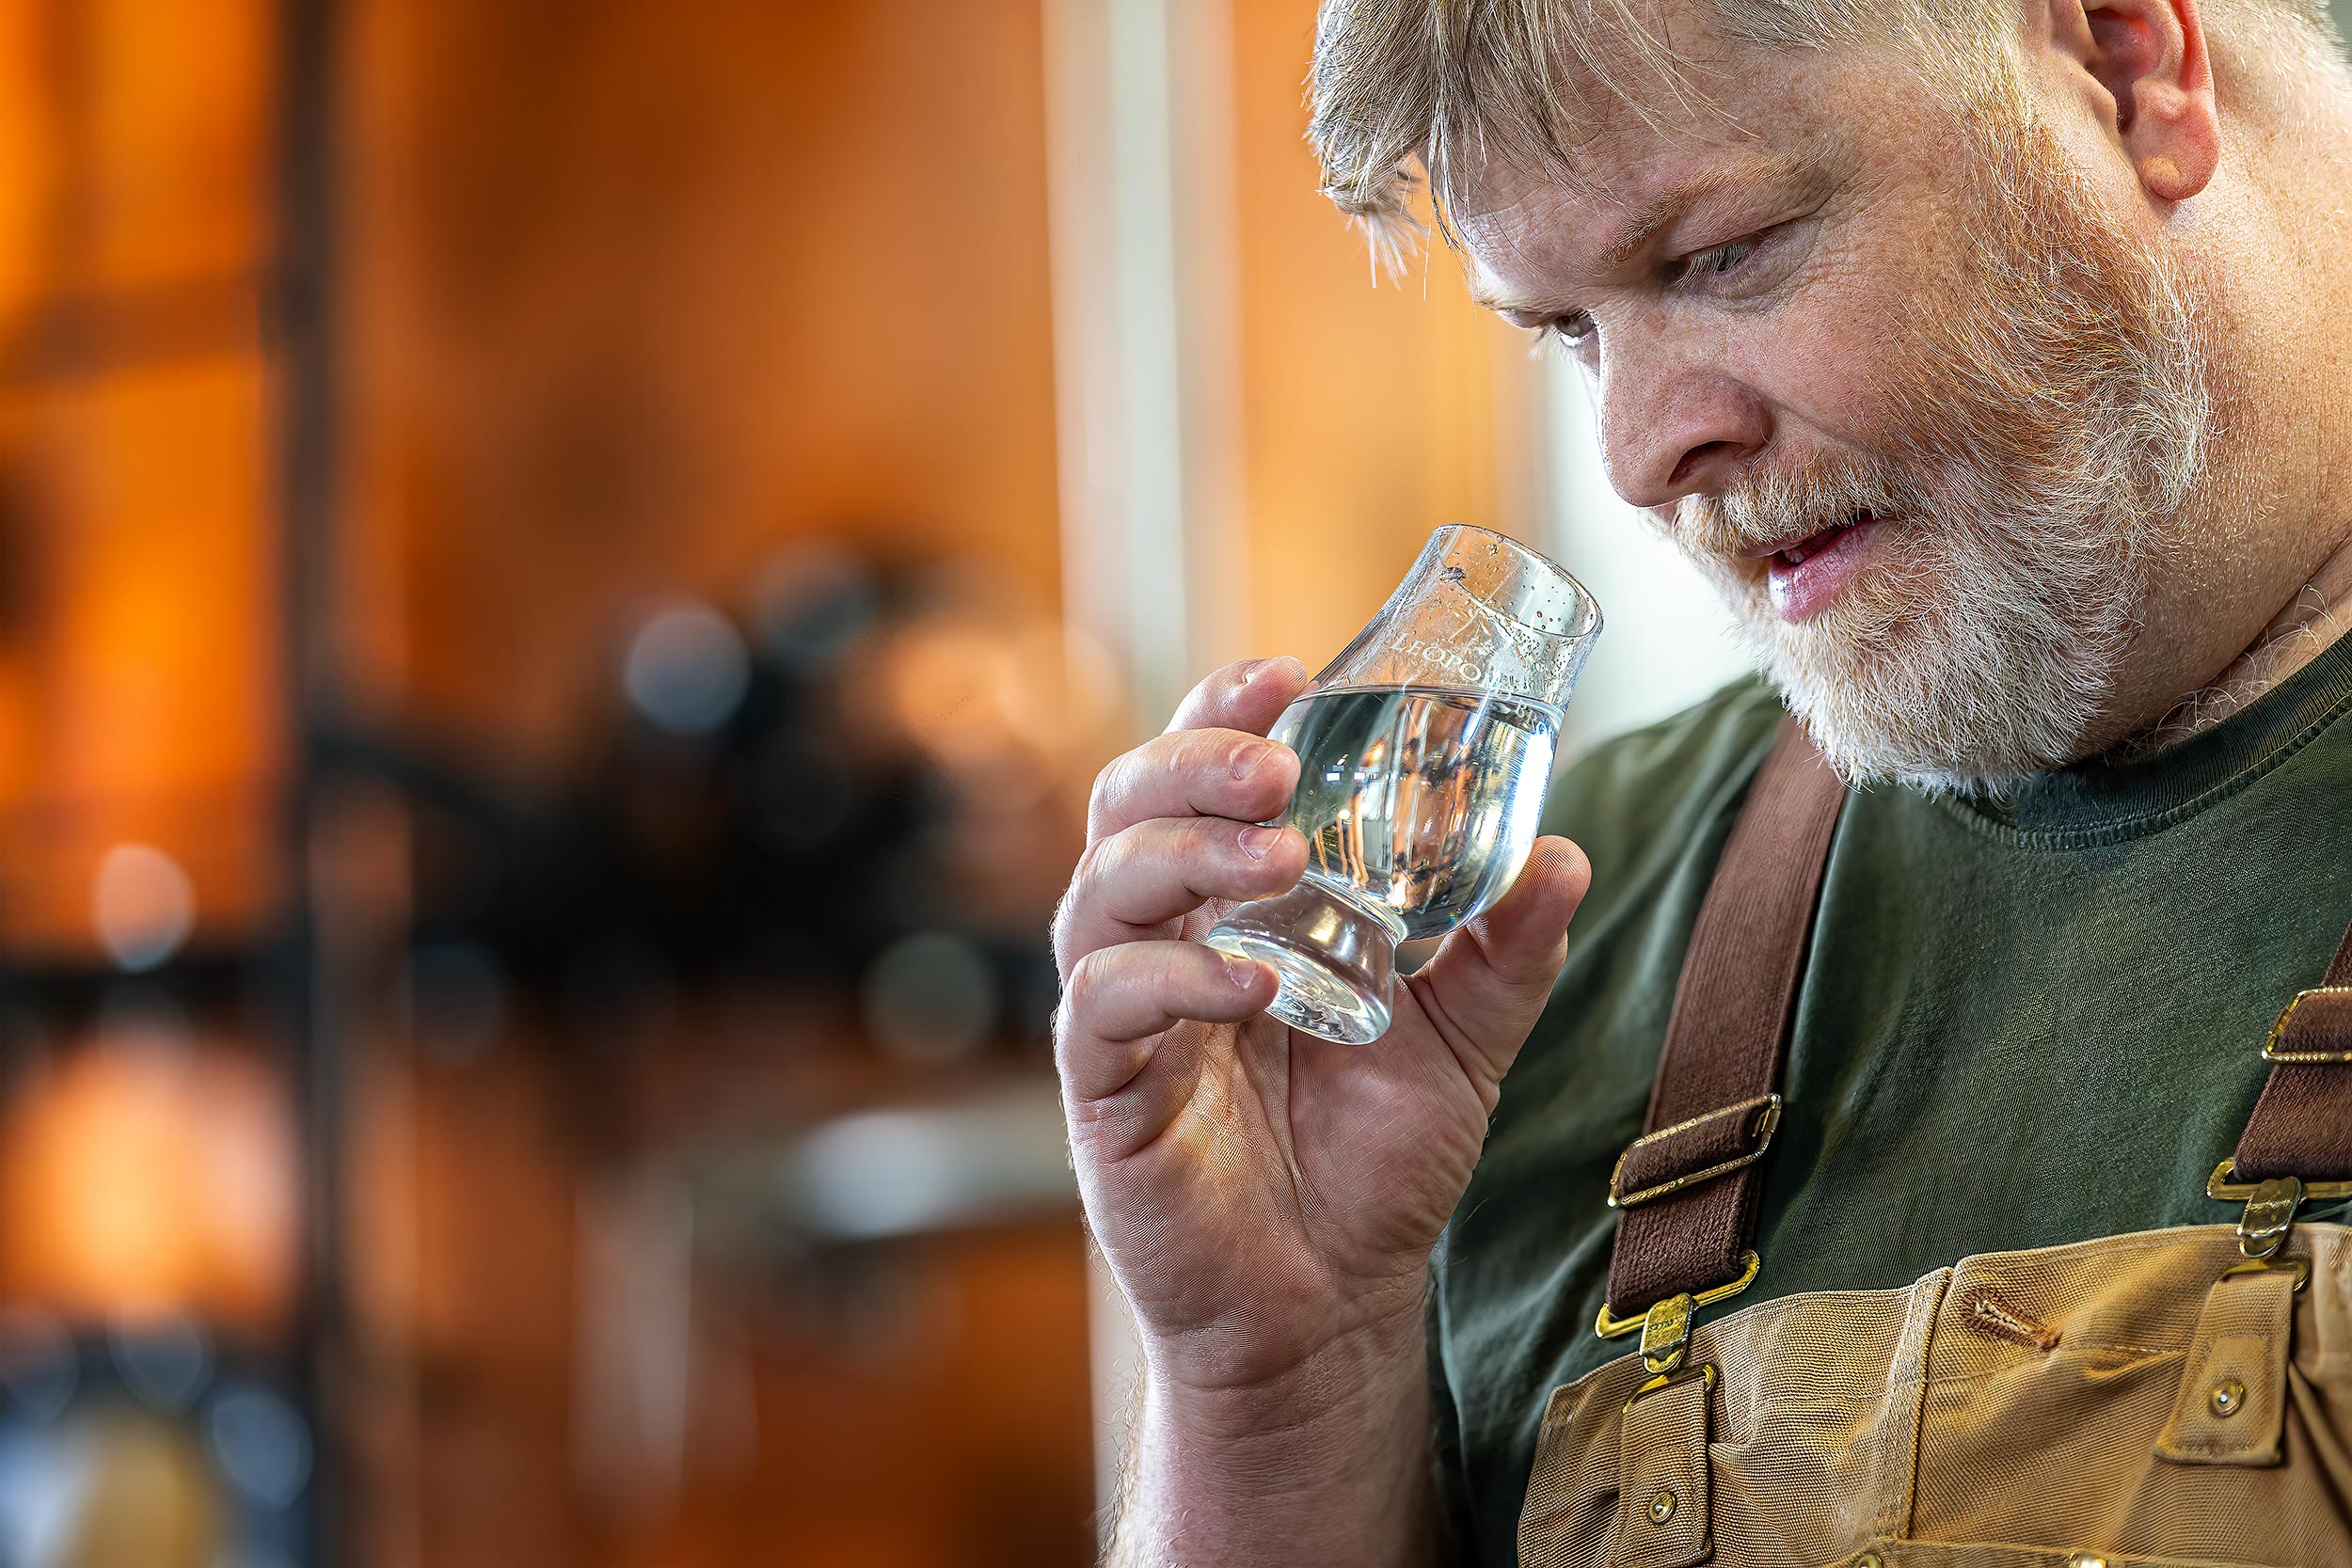 Master Distiller, Distilling Hand-crafted whiskey.